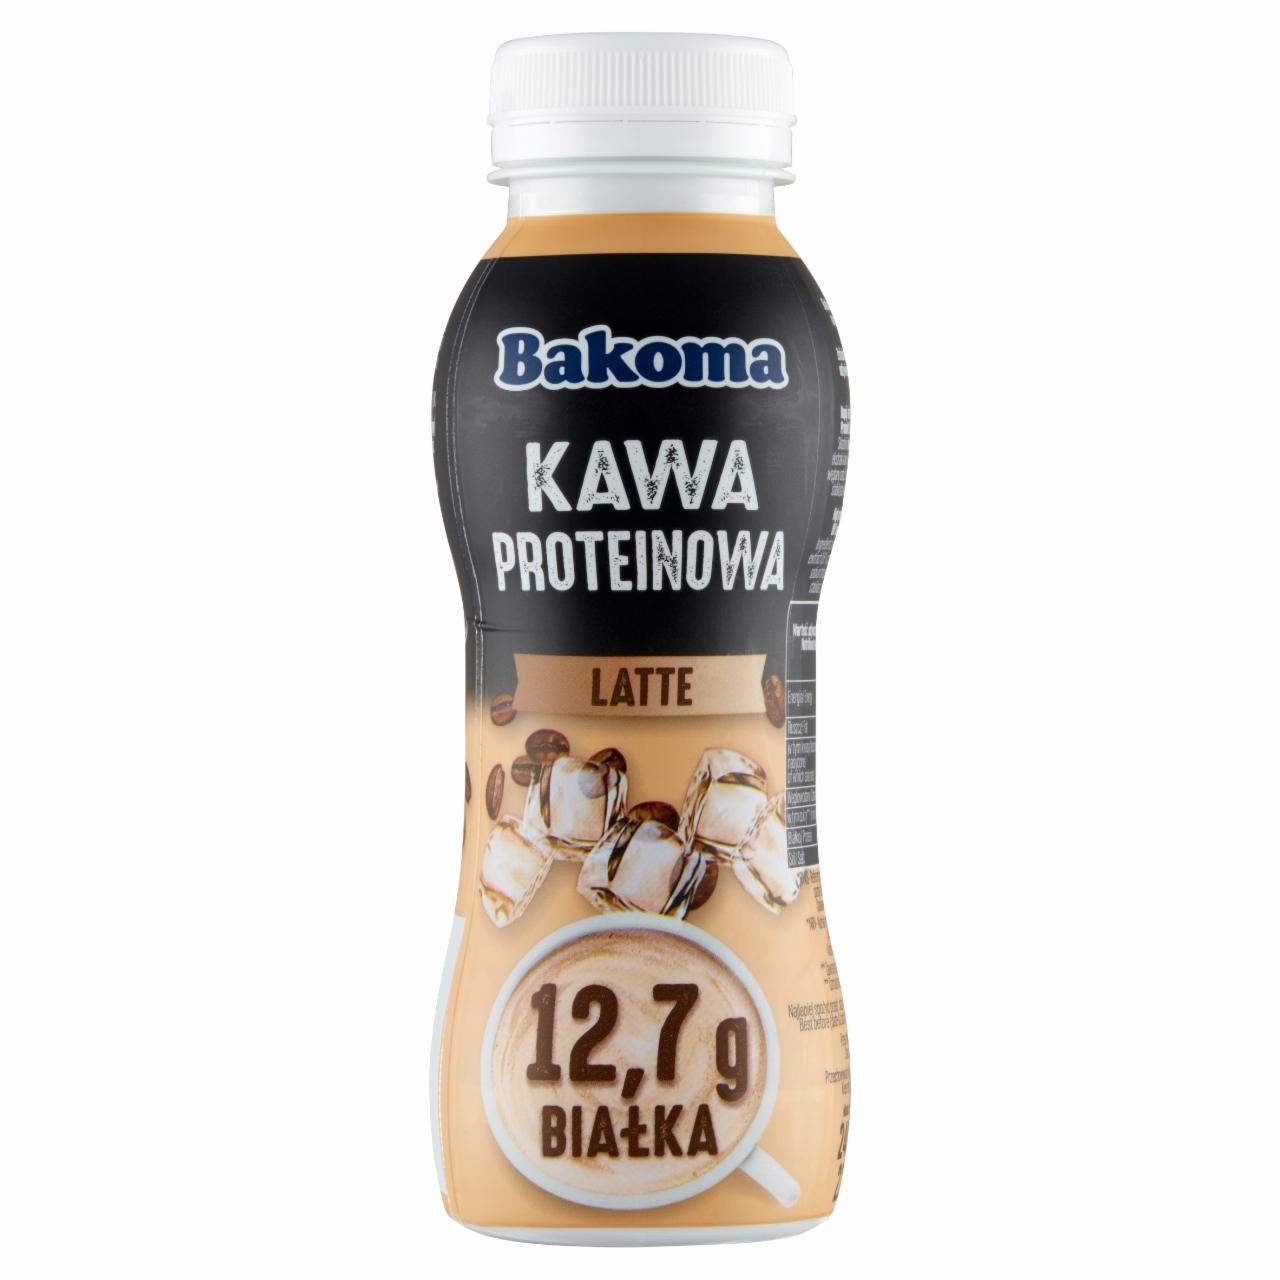 Fotografie - Kawa proteinowa Latte Bakoma